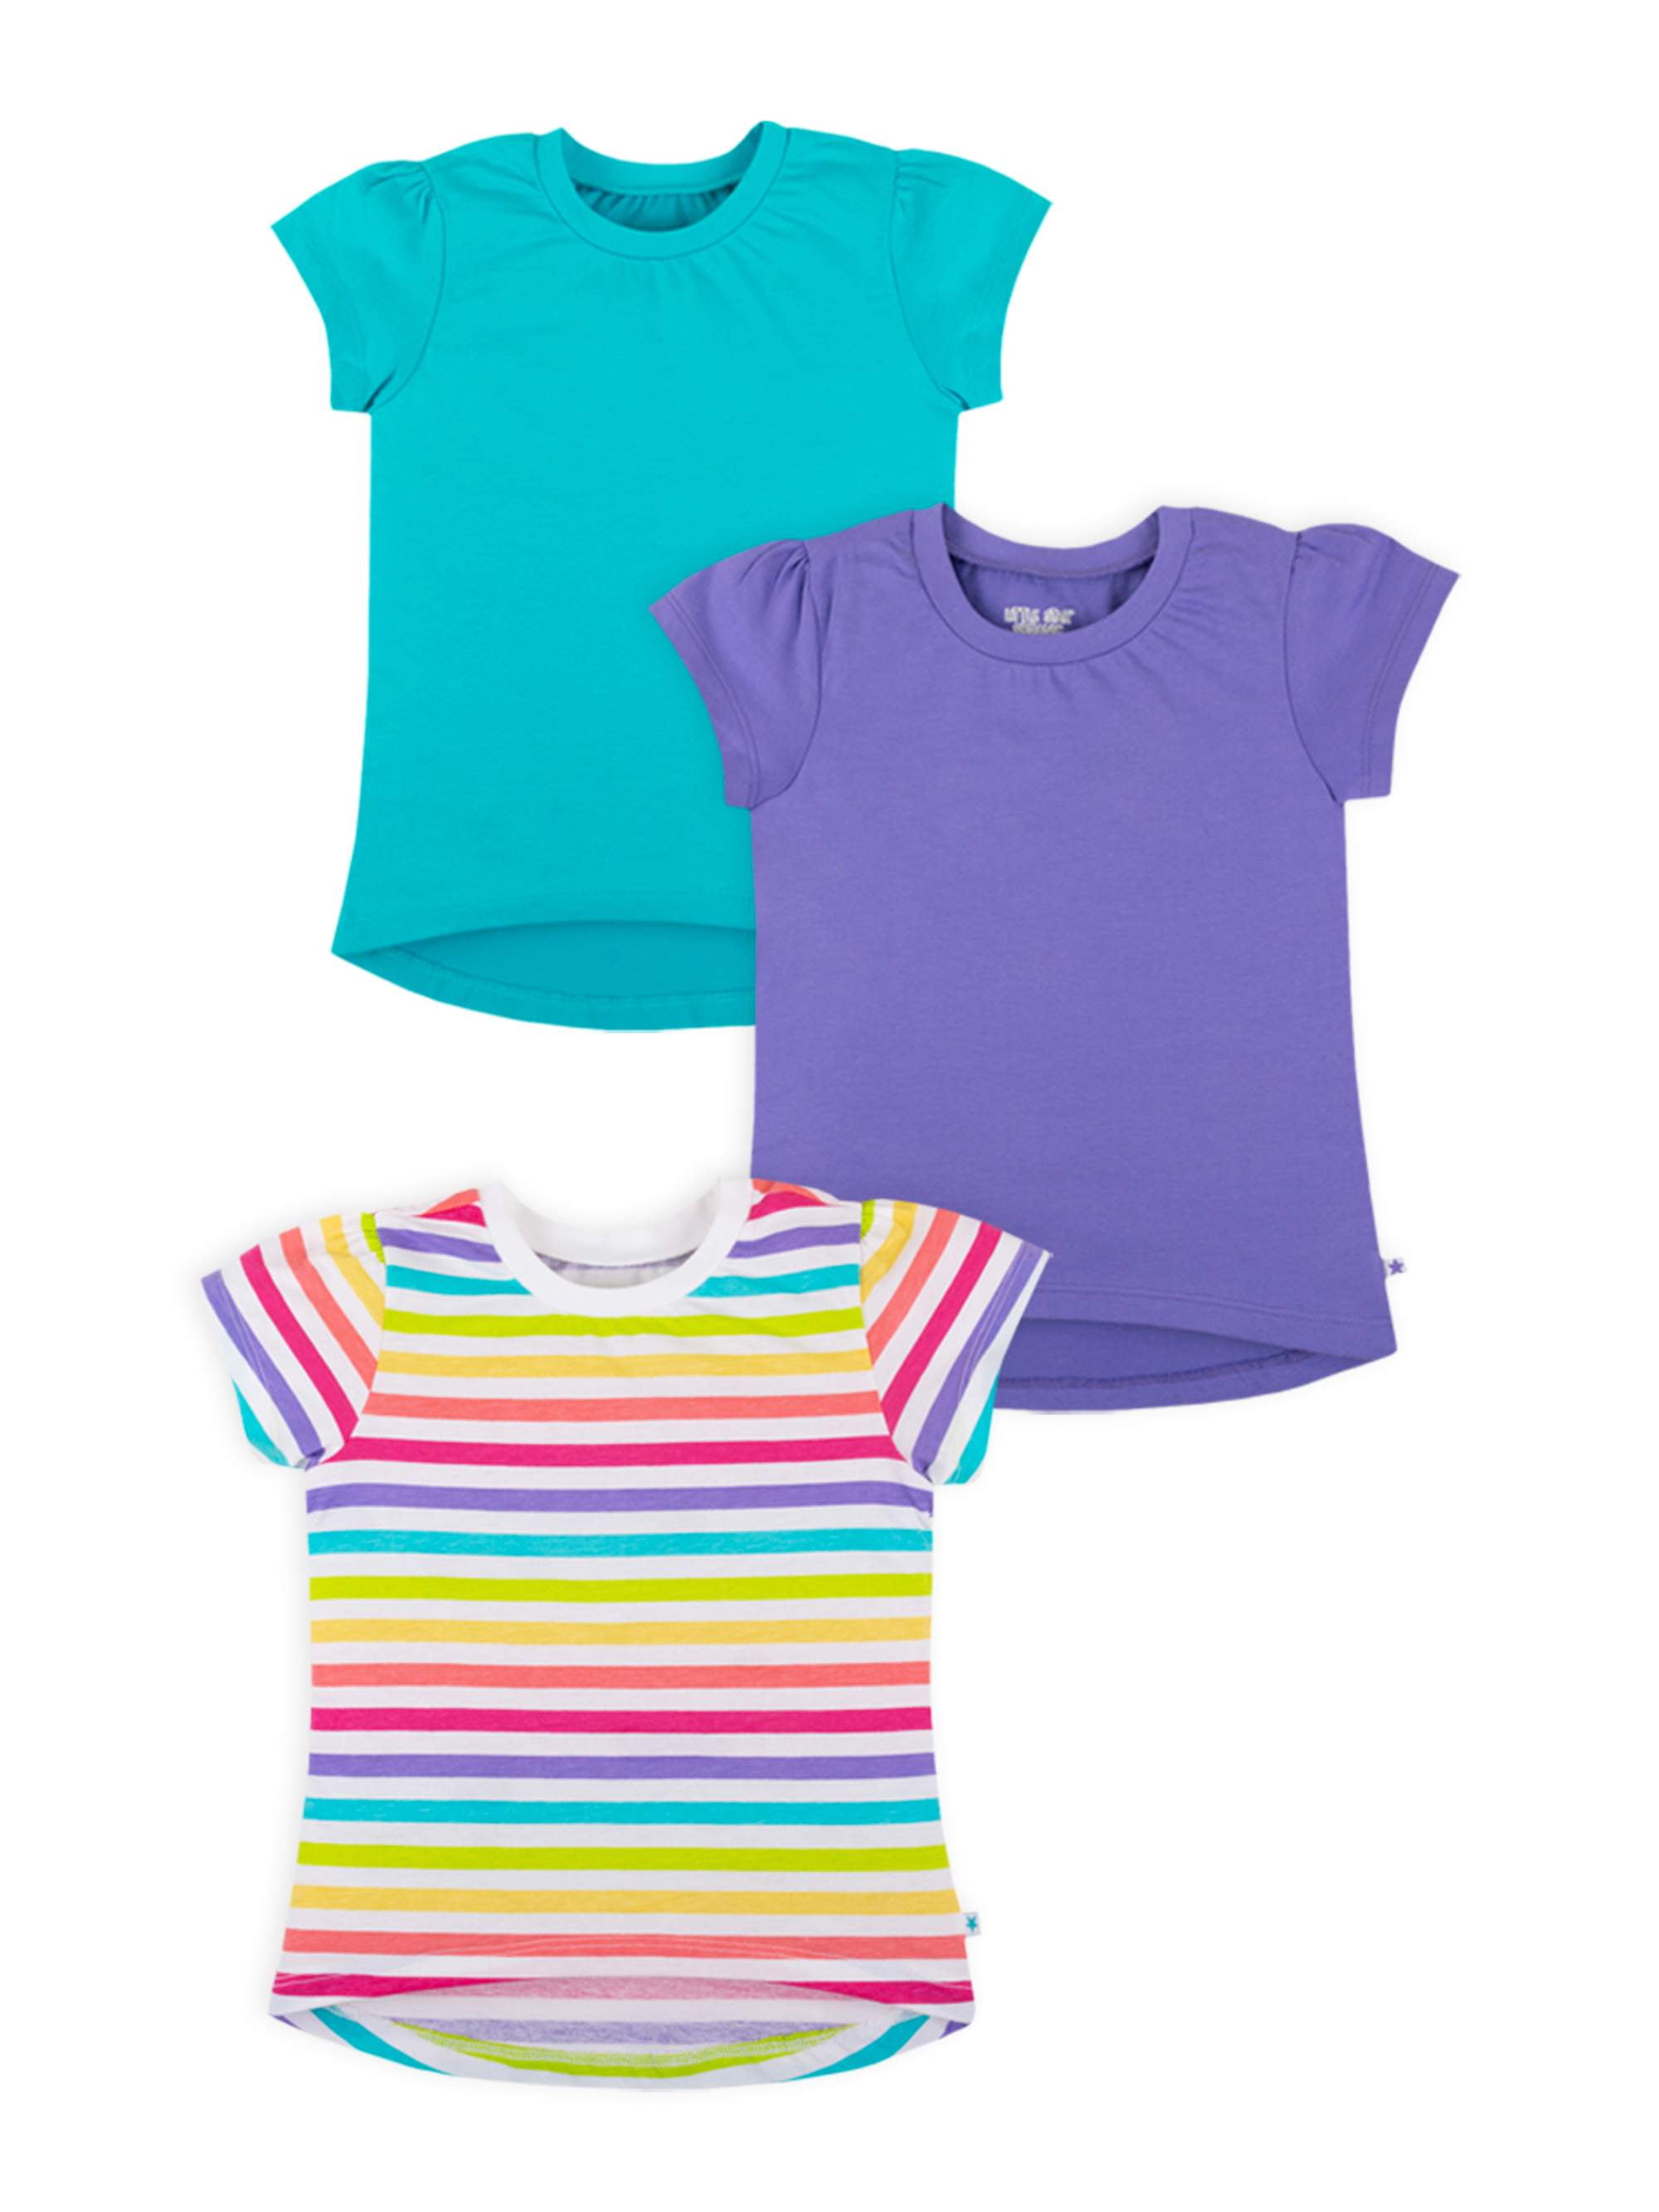 Clementine Baby-Girls Infant Soft Cotton Jersey Tees Short Sleeve Crewneck T-Shirt